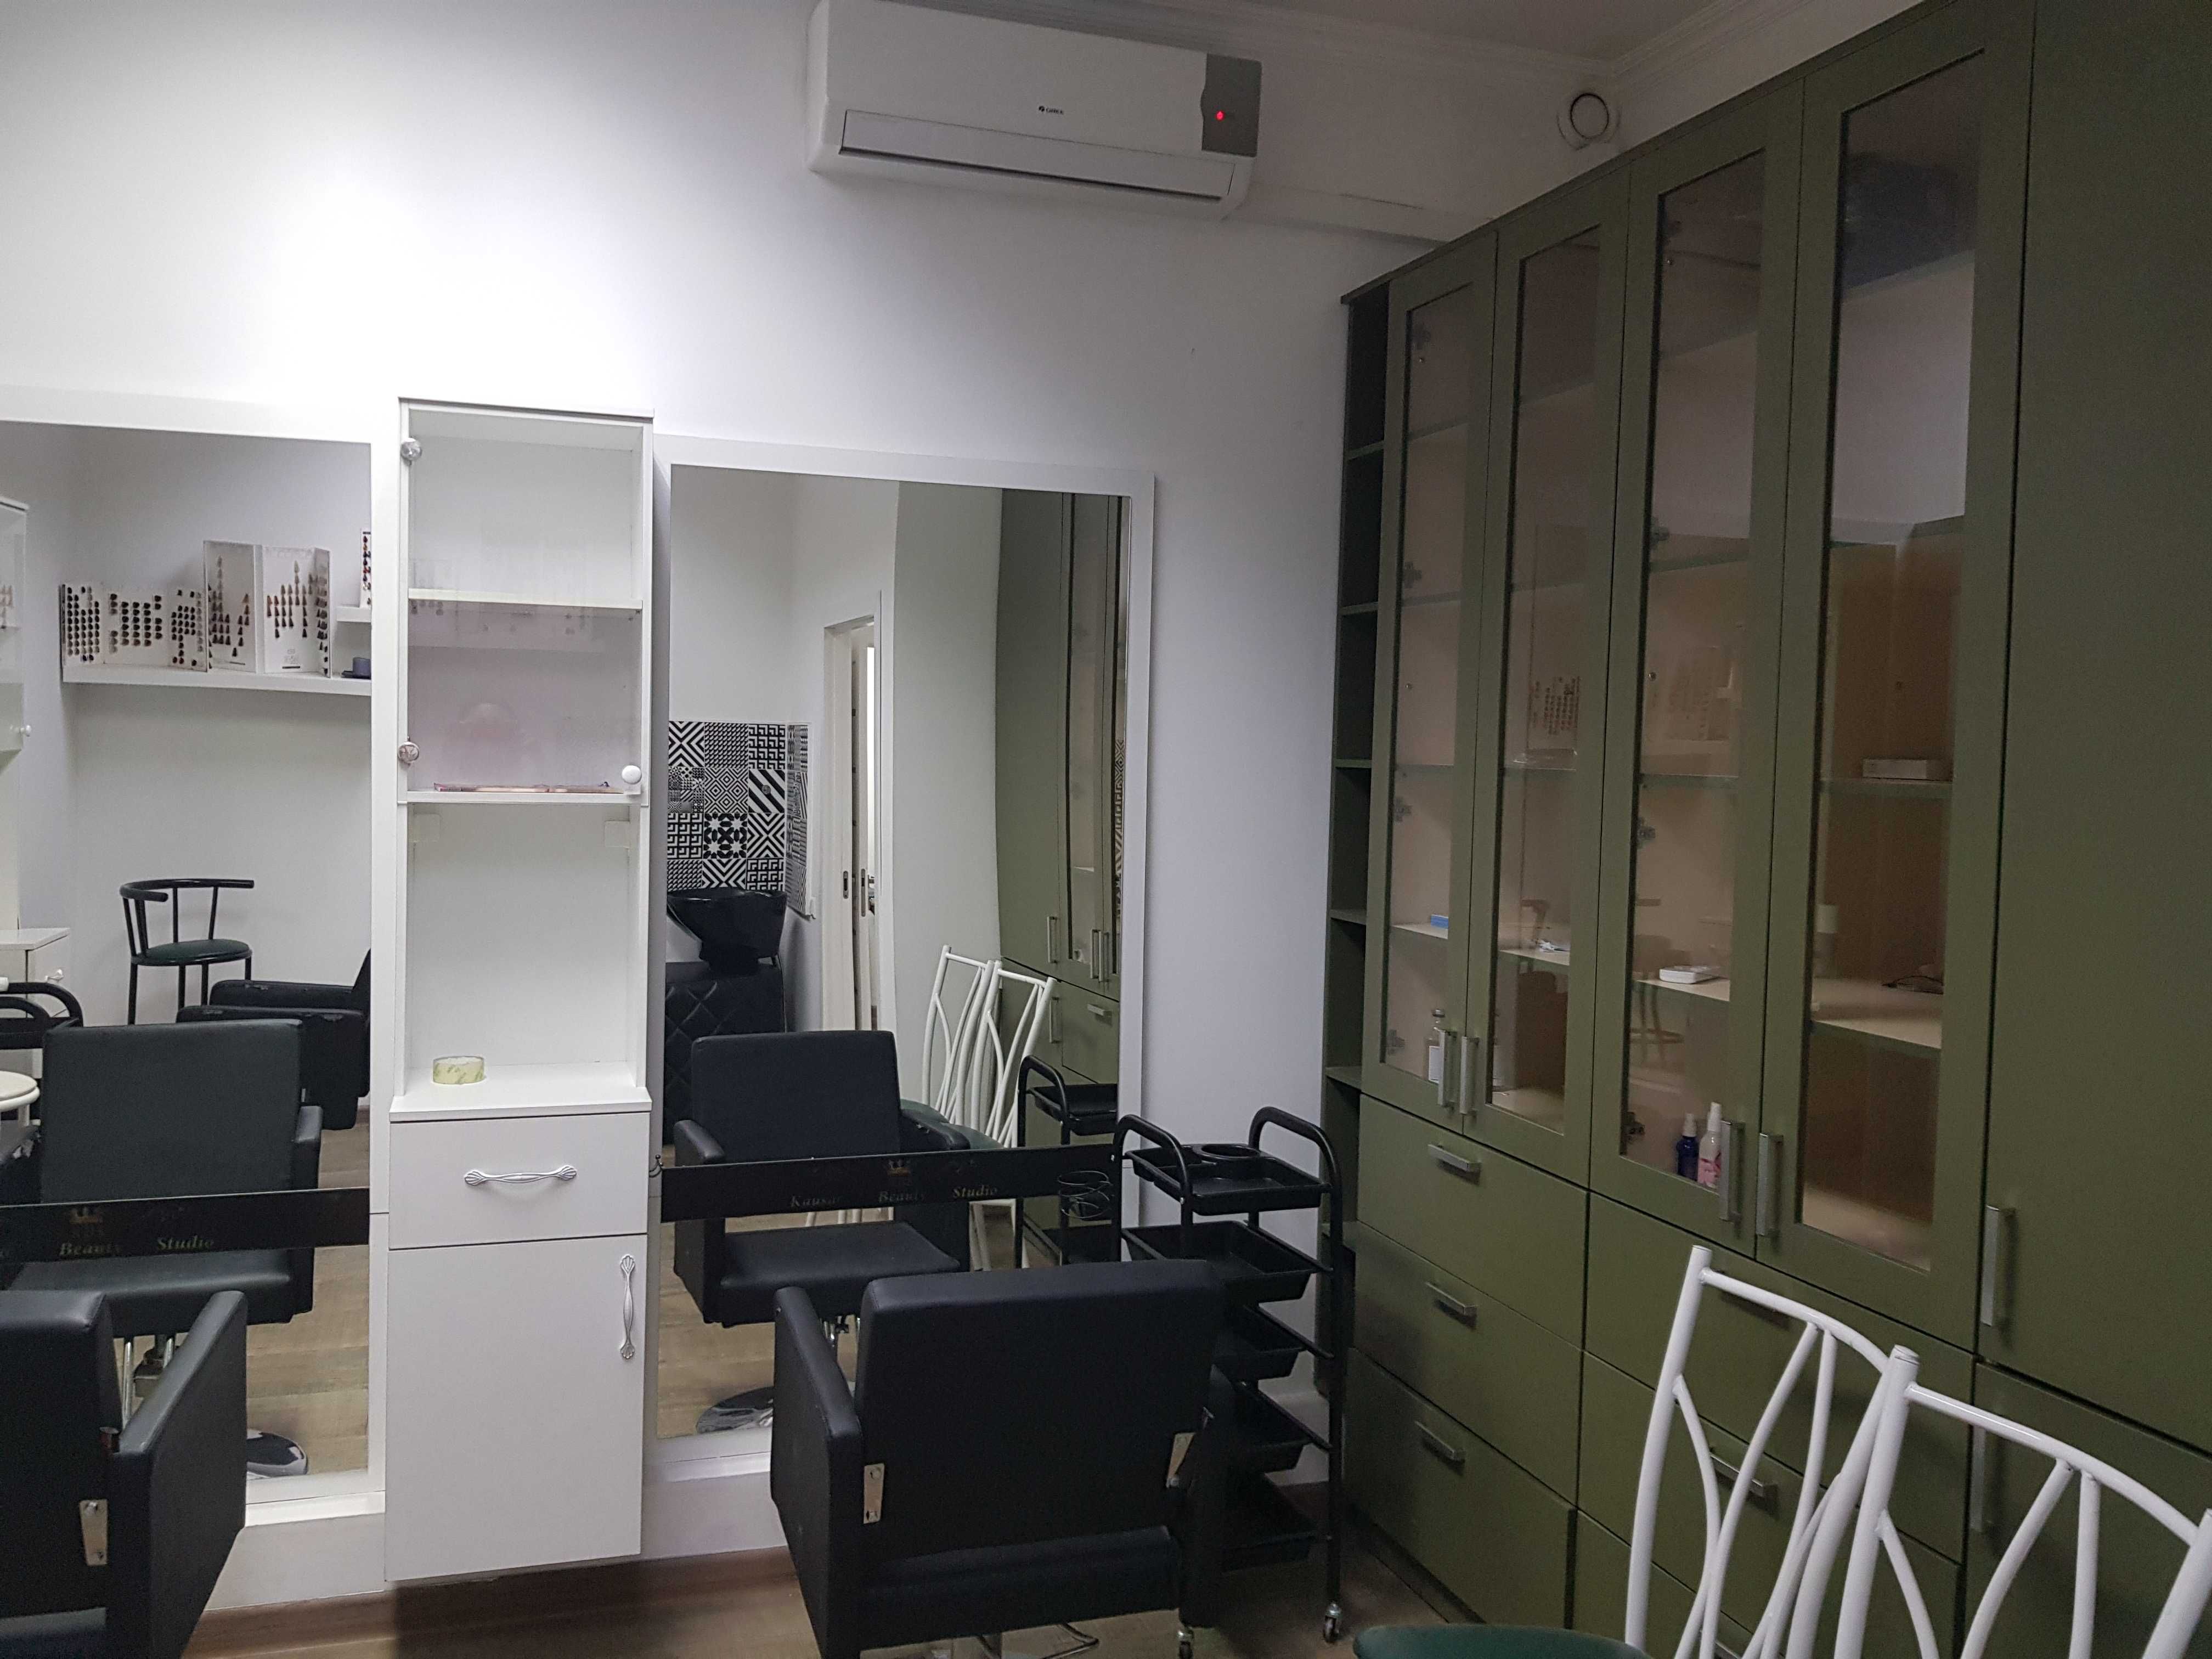 Аренда парикмахерского кабинета в салоне красоты